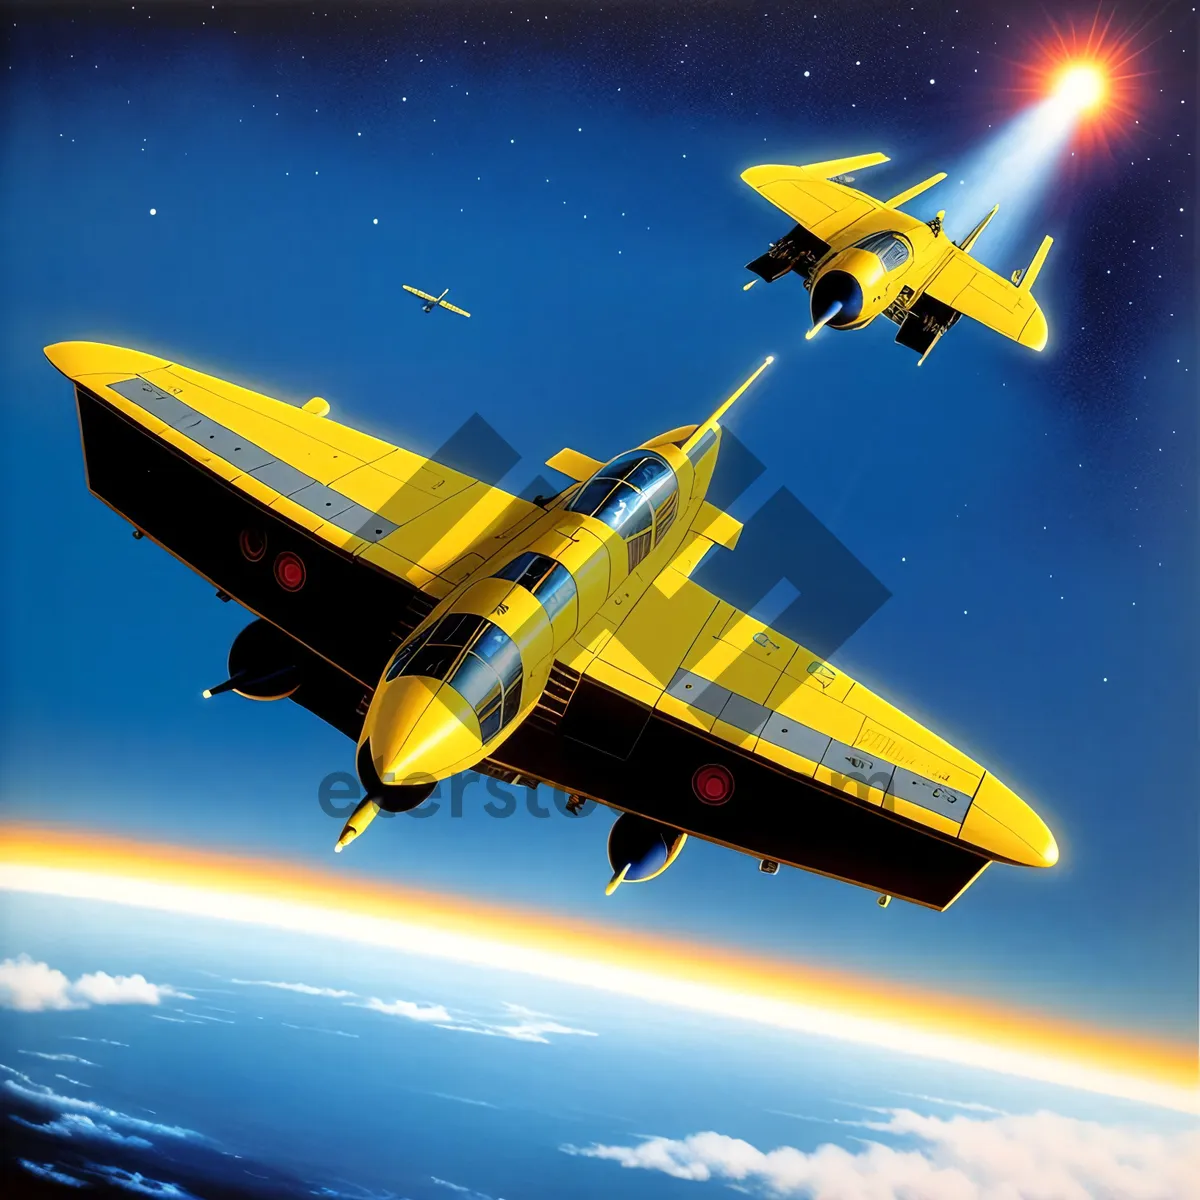 Picture of Skybound Speed: Airplane Propeller Jet in Flight